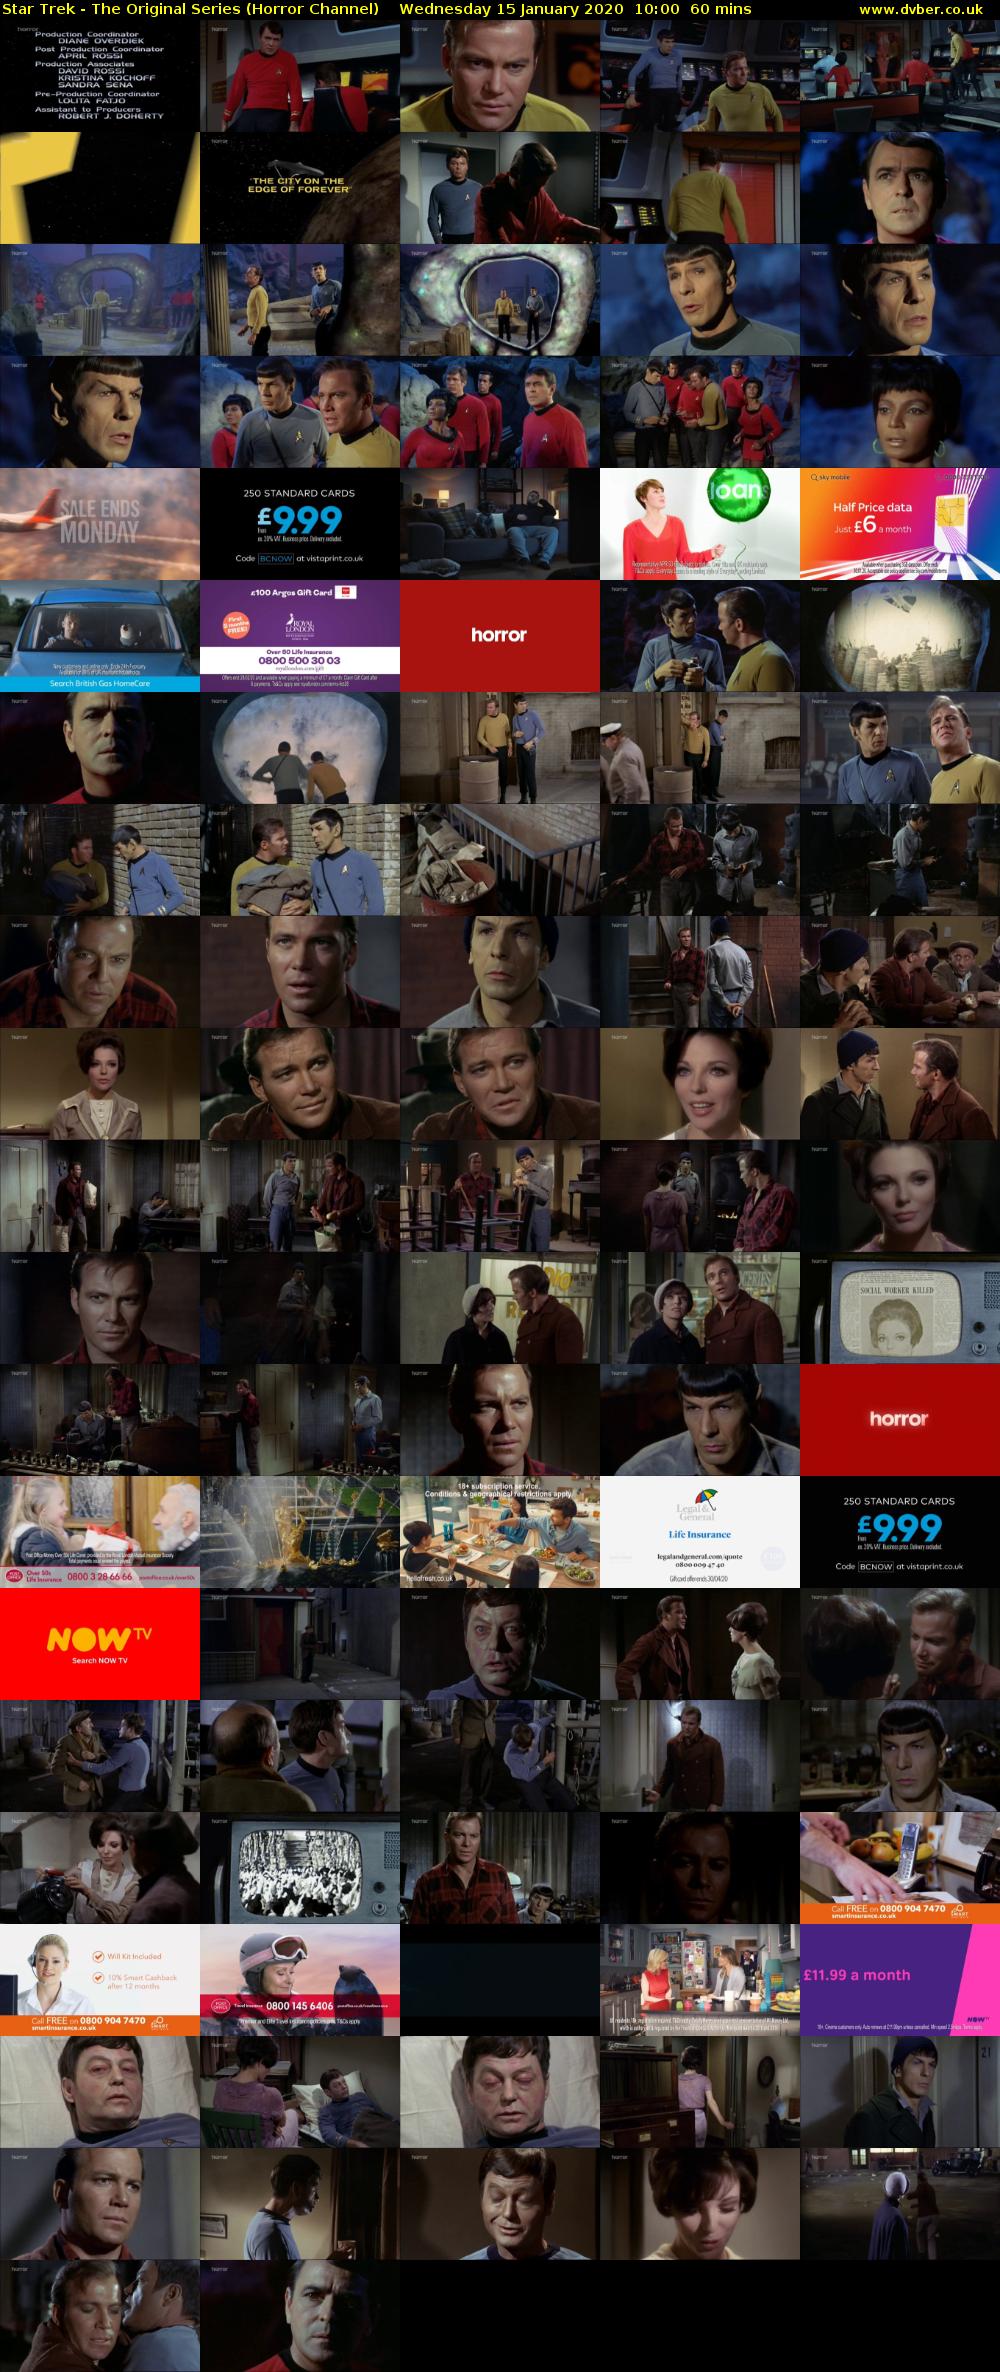 Star Trek - The Original Series (Horror Channel) Wednesday 15 January 2020 10:00 - 11:00